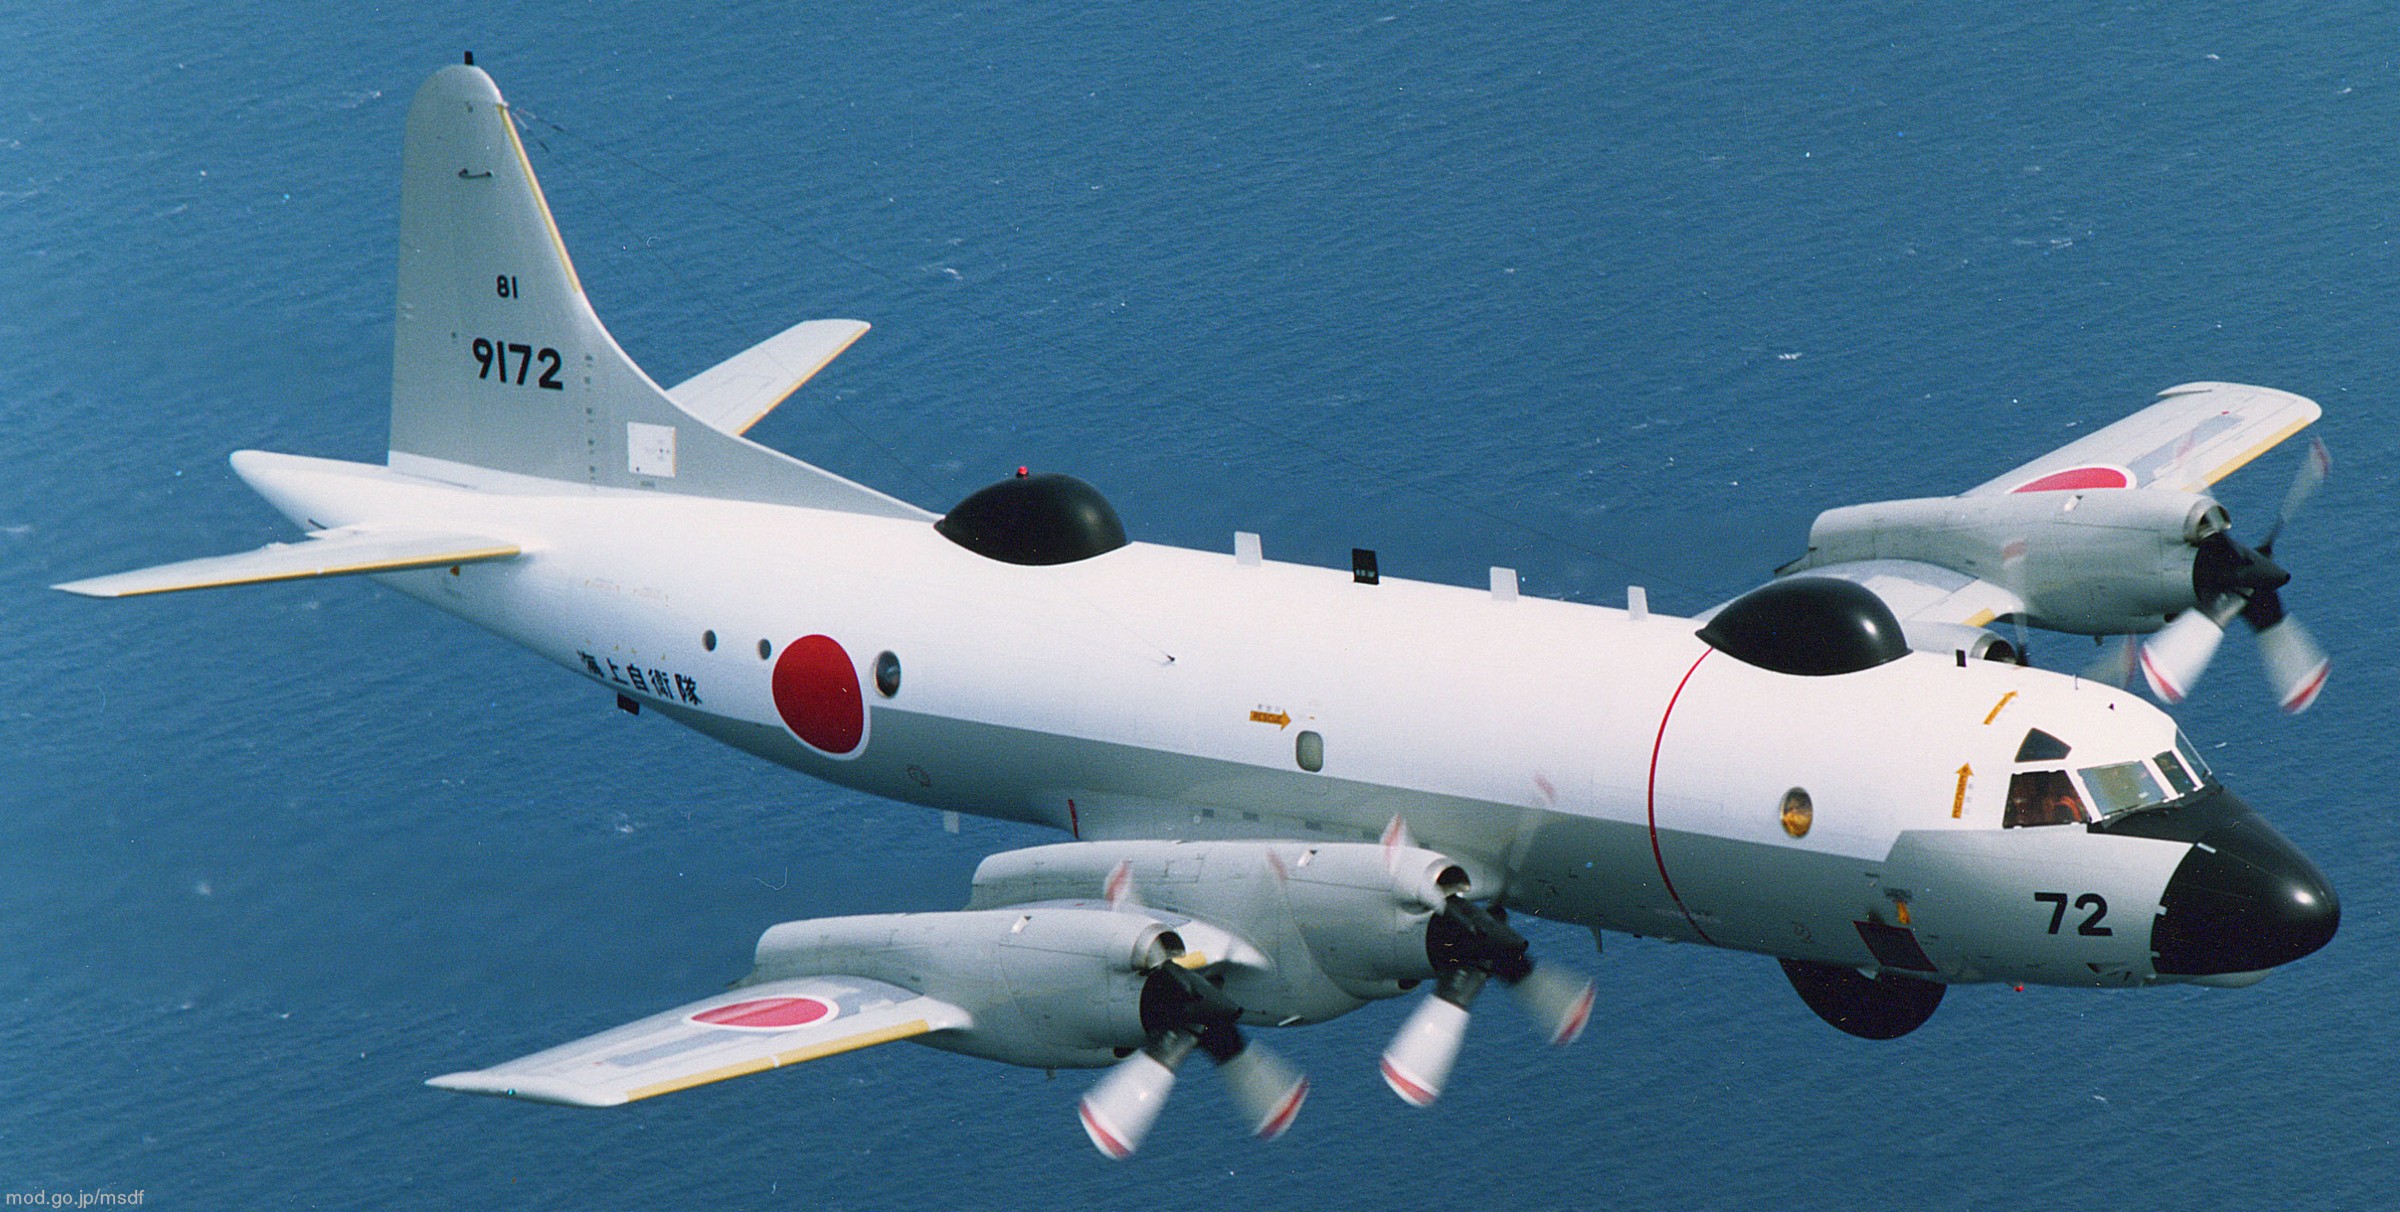 kawasaki ep-3 orion elint patrol aircraft mpa japan maritime self defense force jmsdf 9172 02